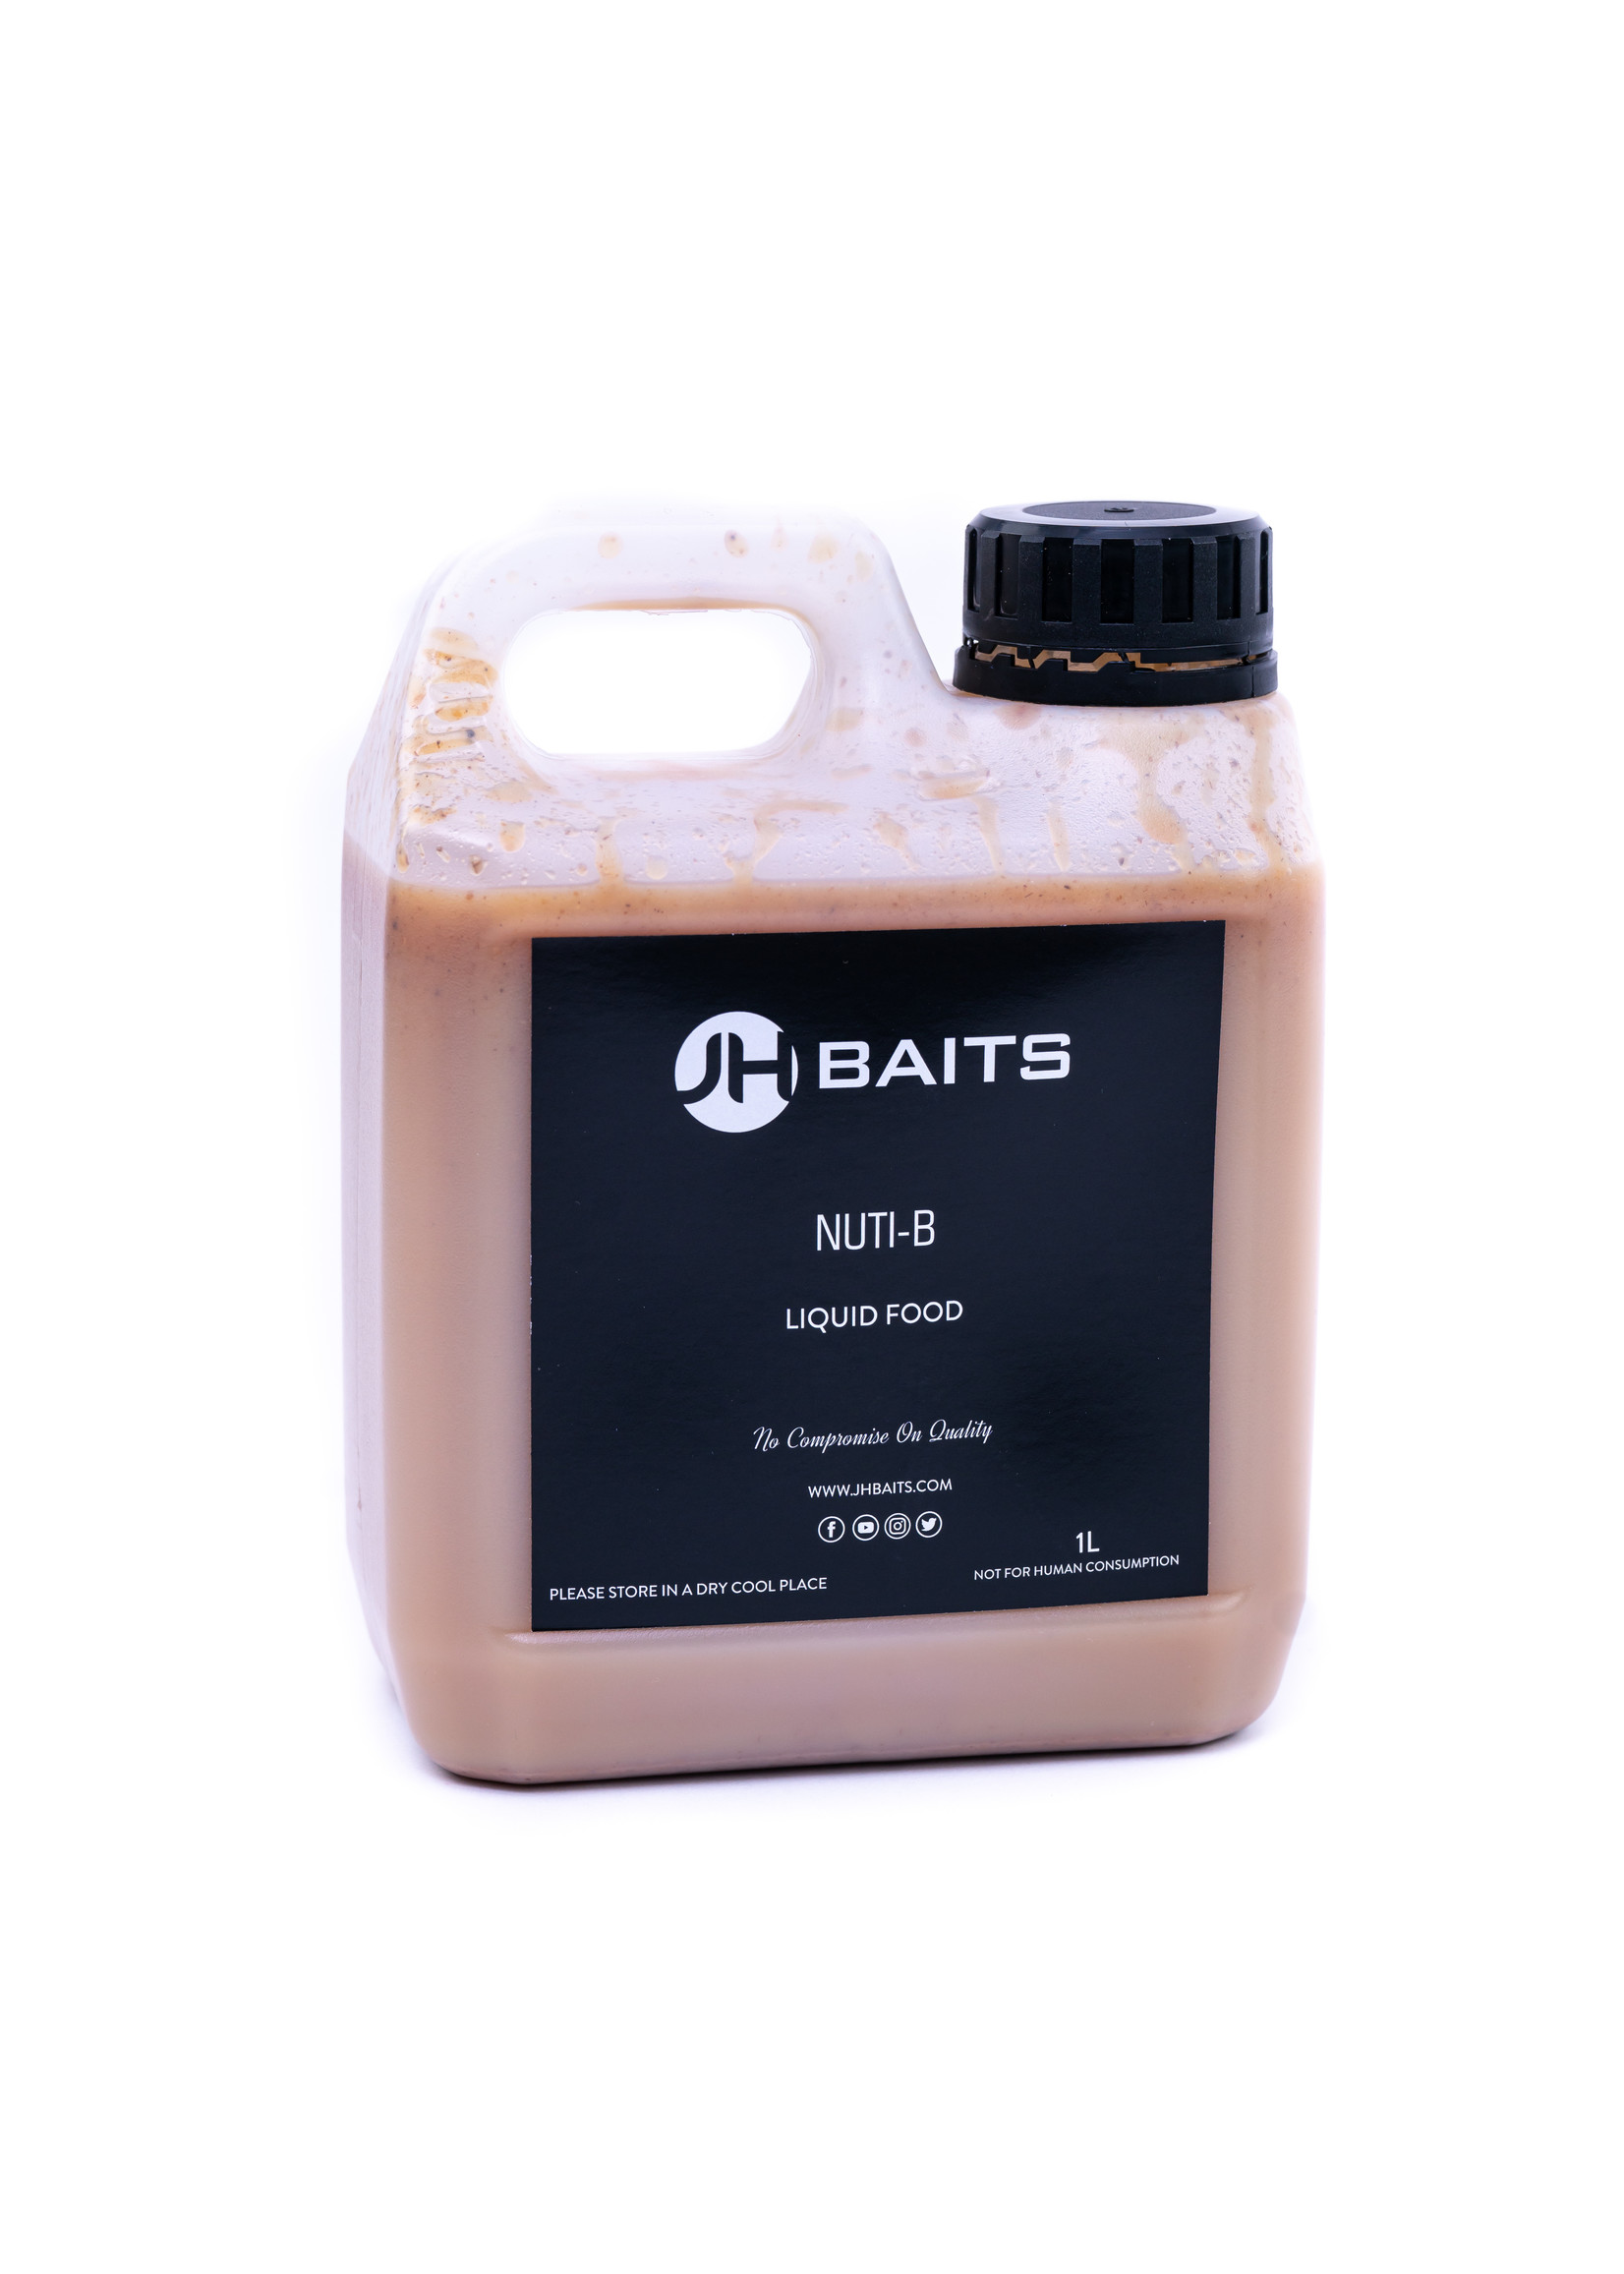 JH Baits Nourriture Liquide Nuti-B 1L